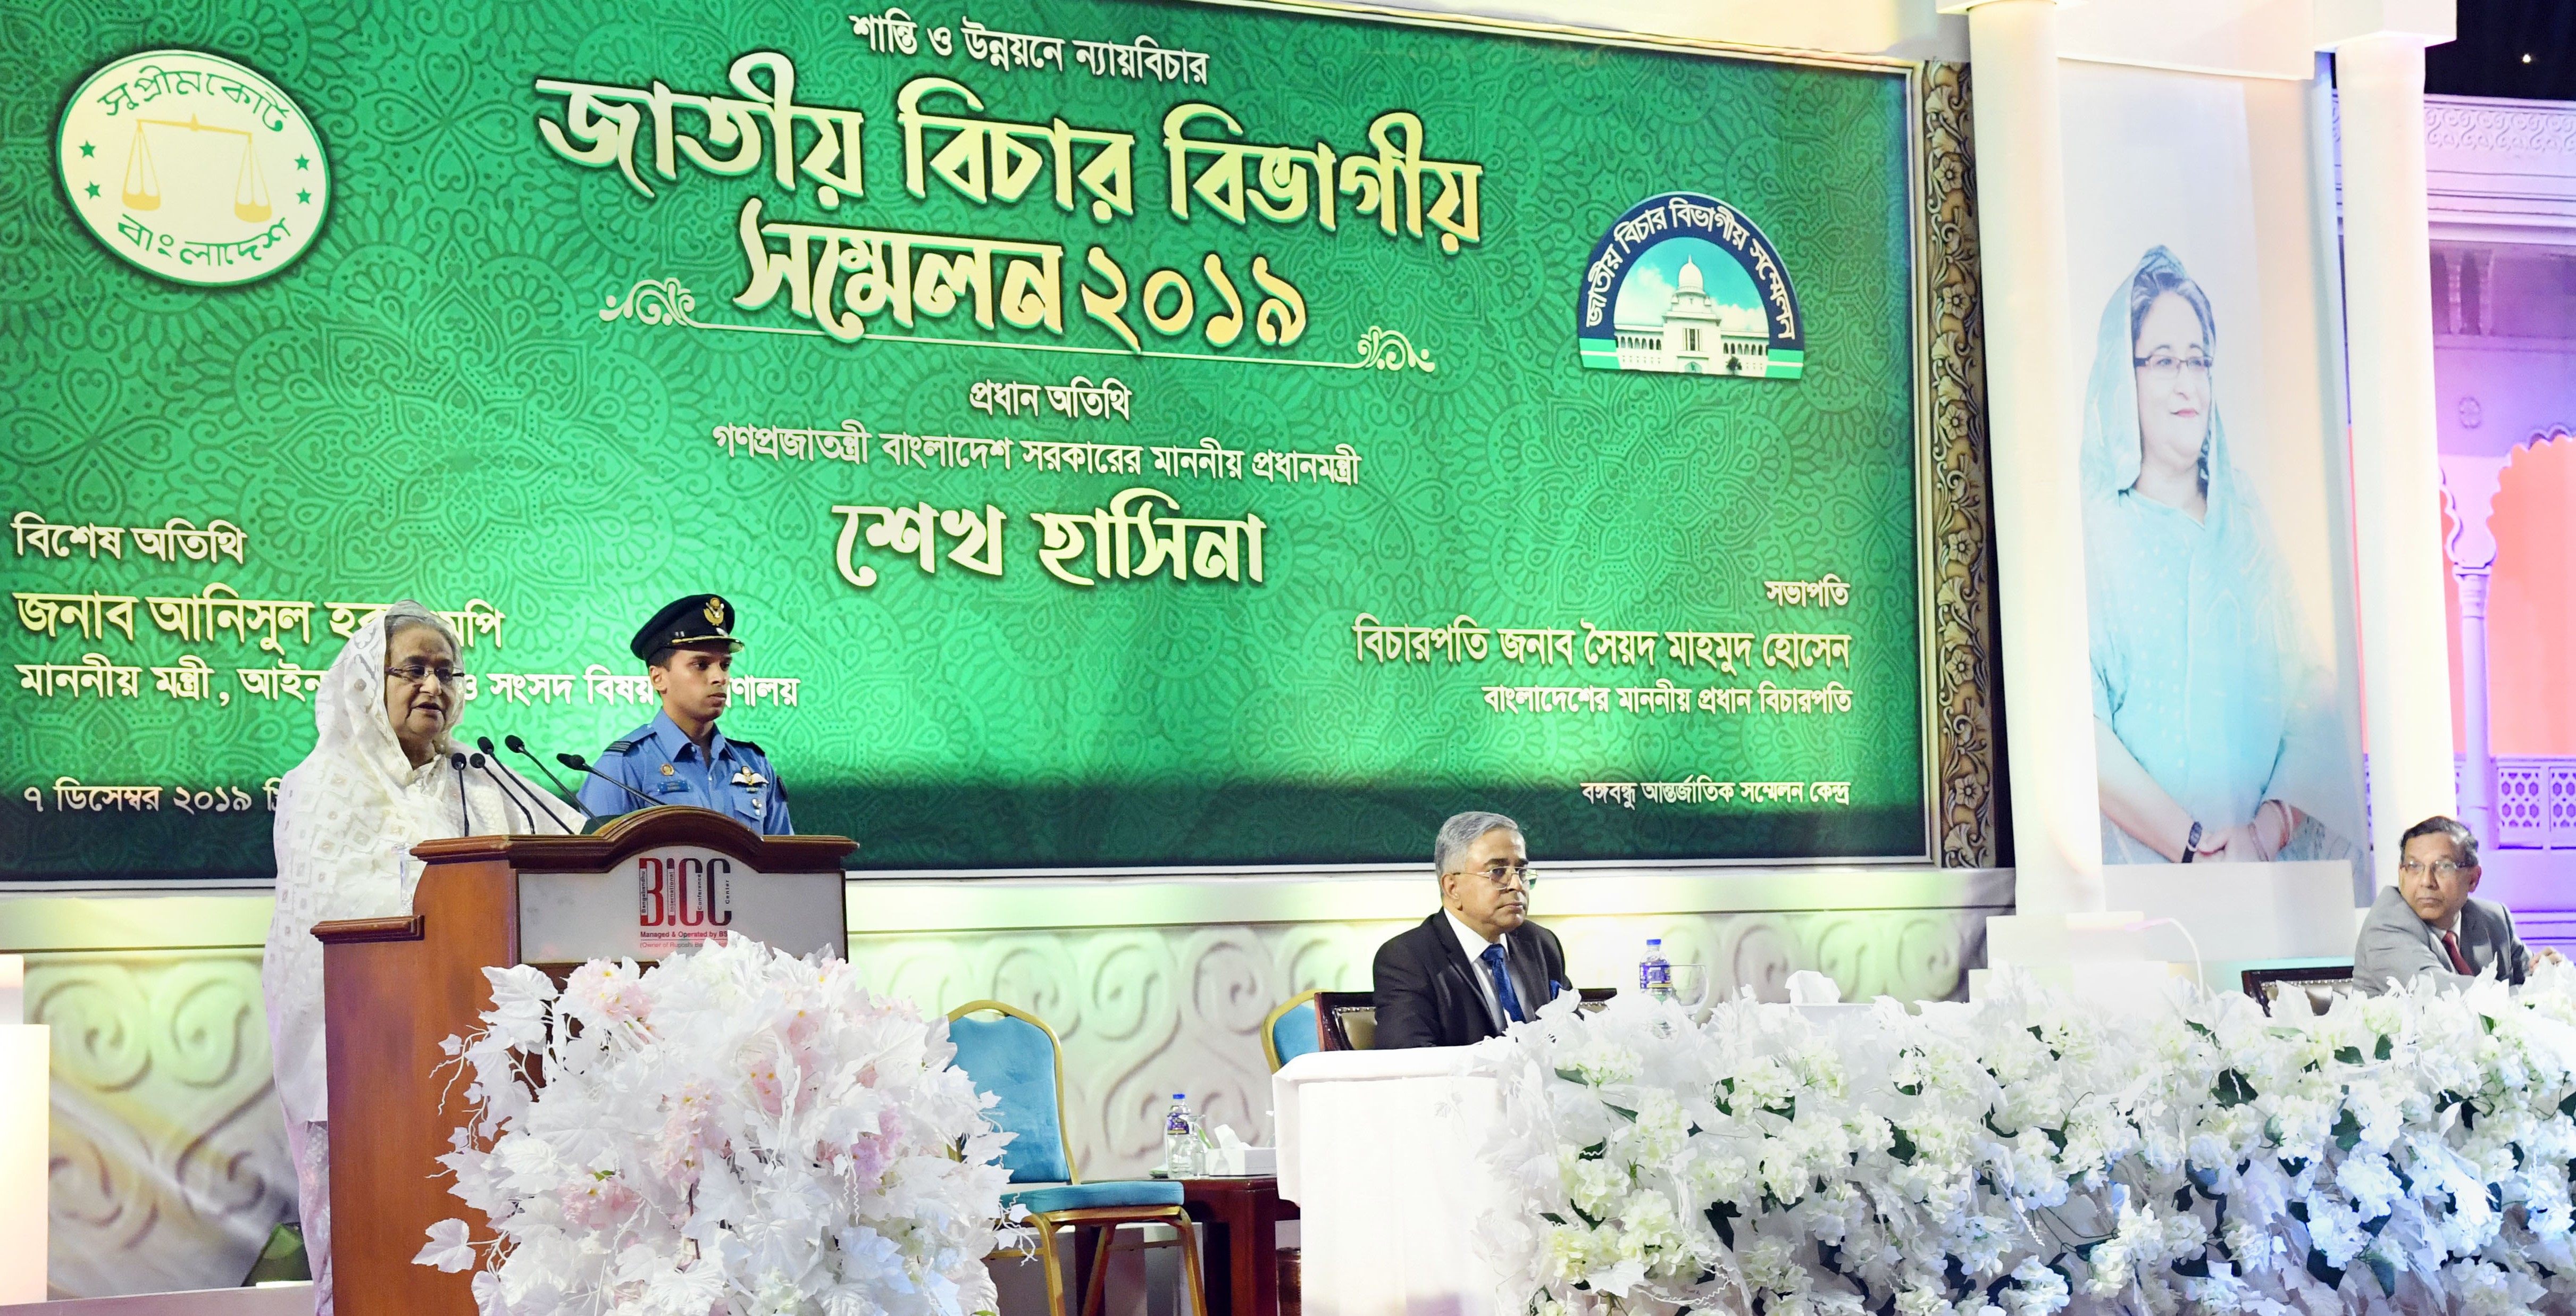 PM Hasina says Bangladesh to have digital cinema halls to earn more viewership